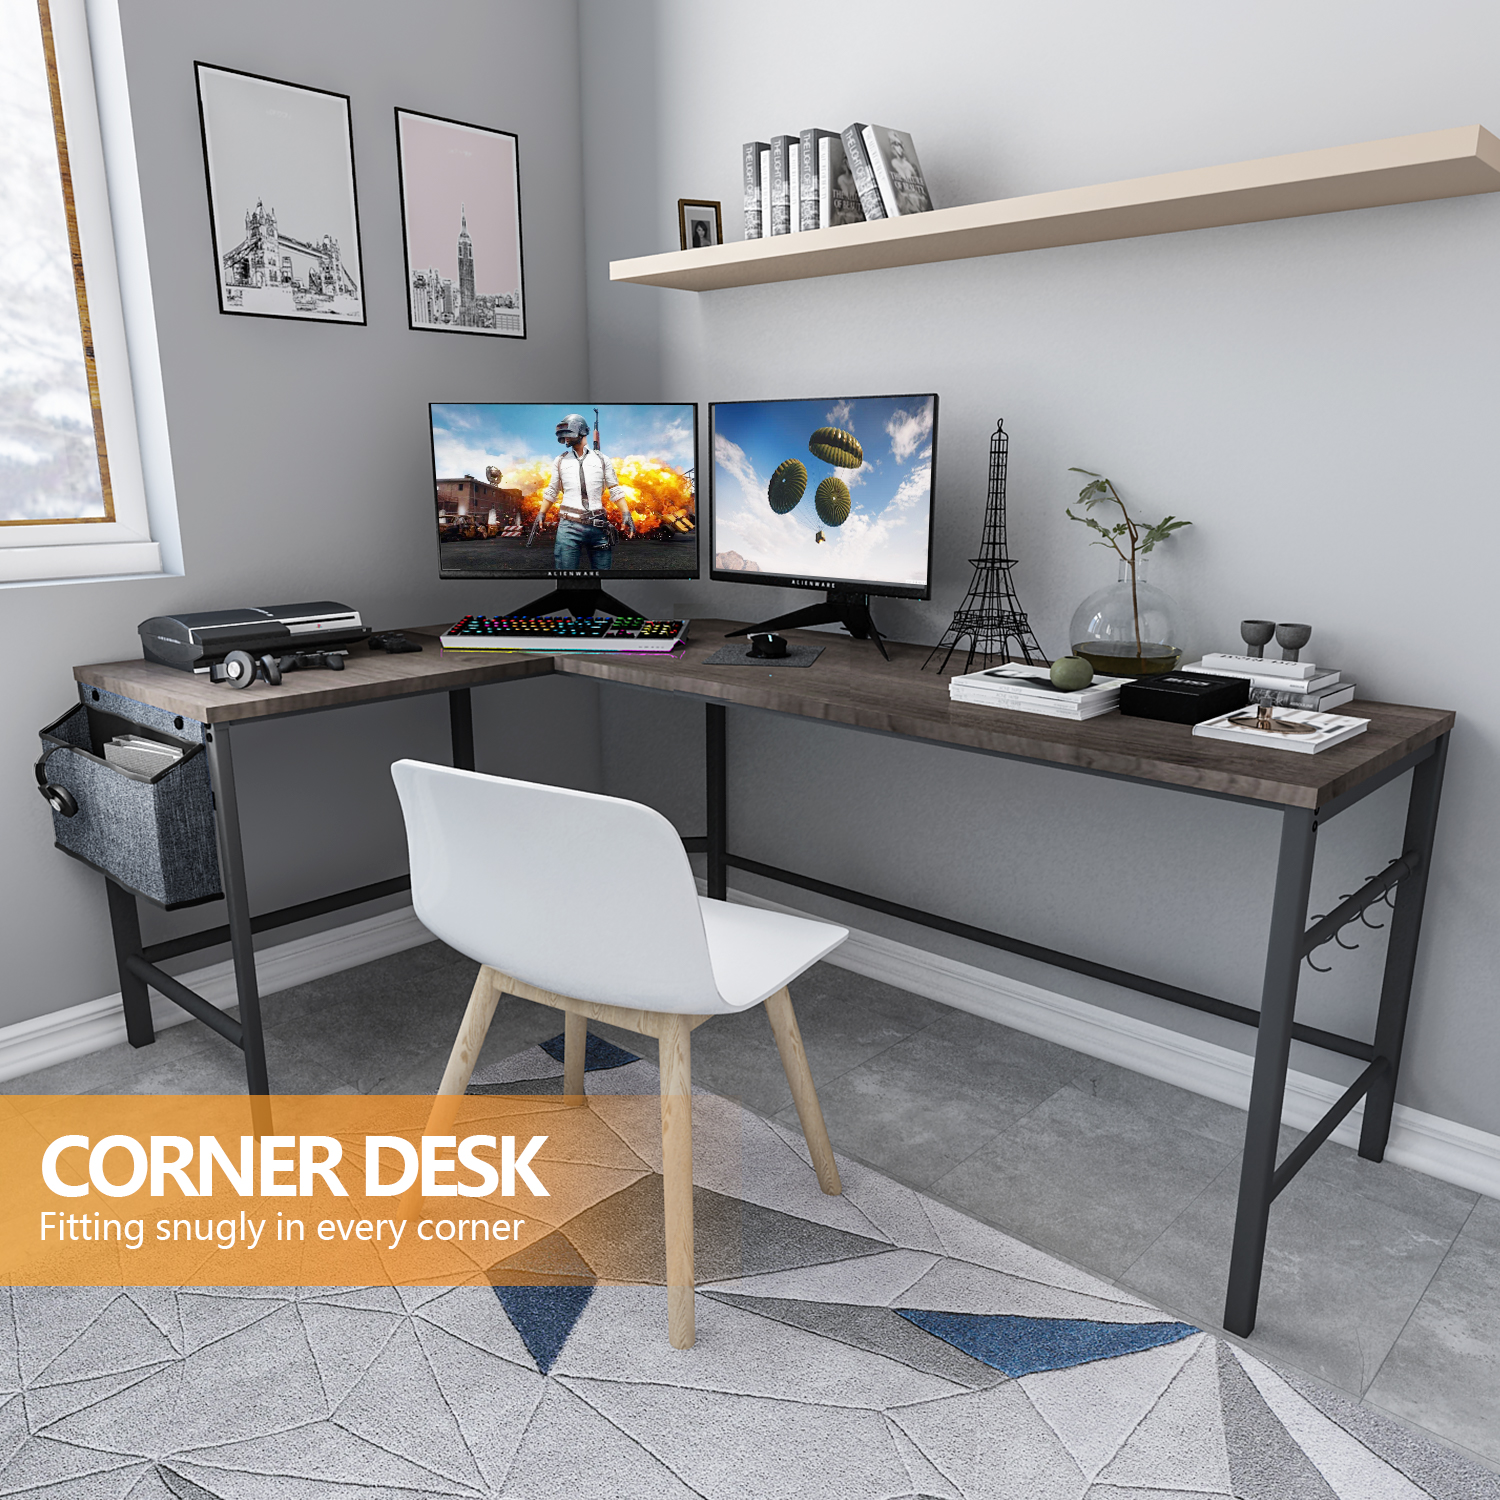 Details about   Computer Desk Corner Study Writing Table Workstation Office Desk With Shelves US 